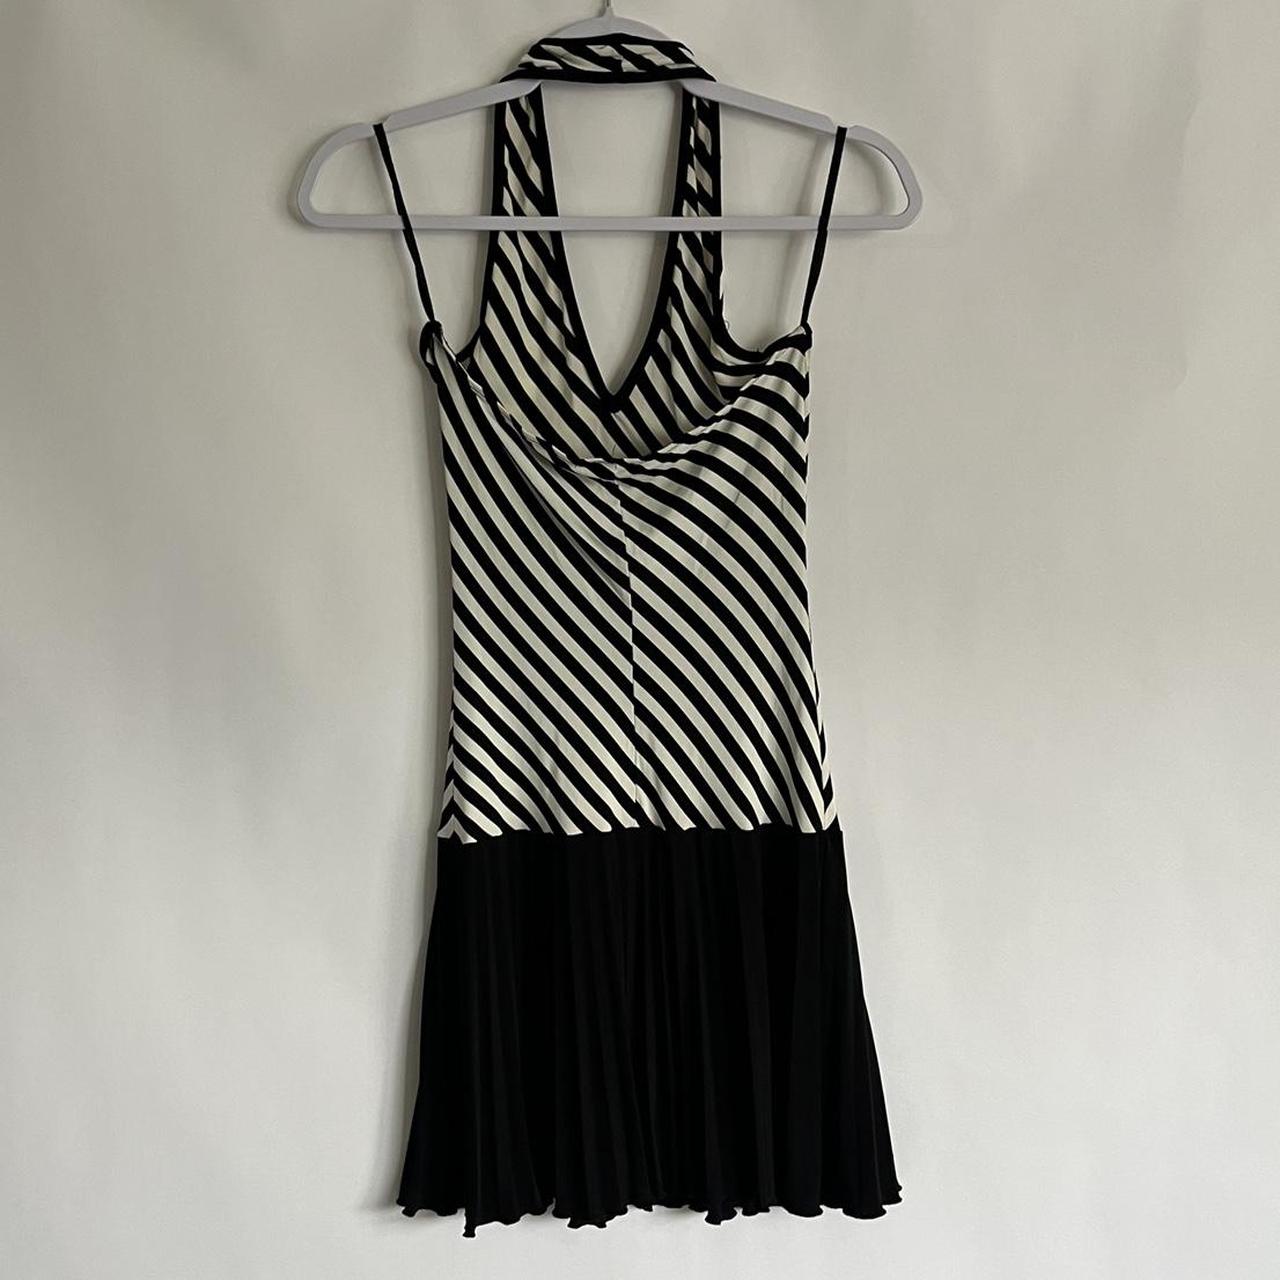 Khaki Krew Women's Black and White Dress (3)